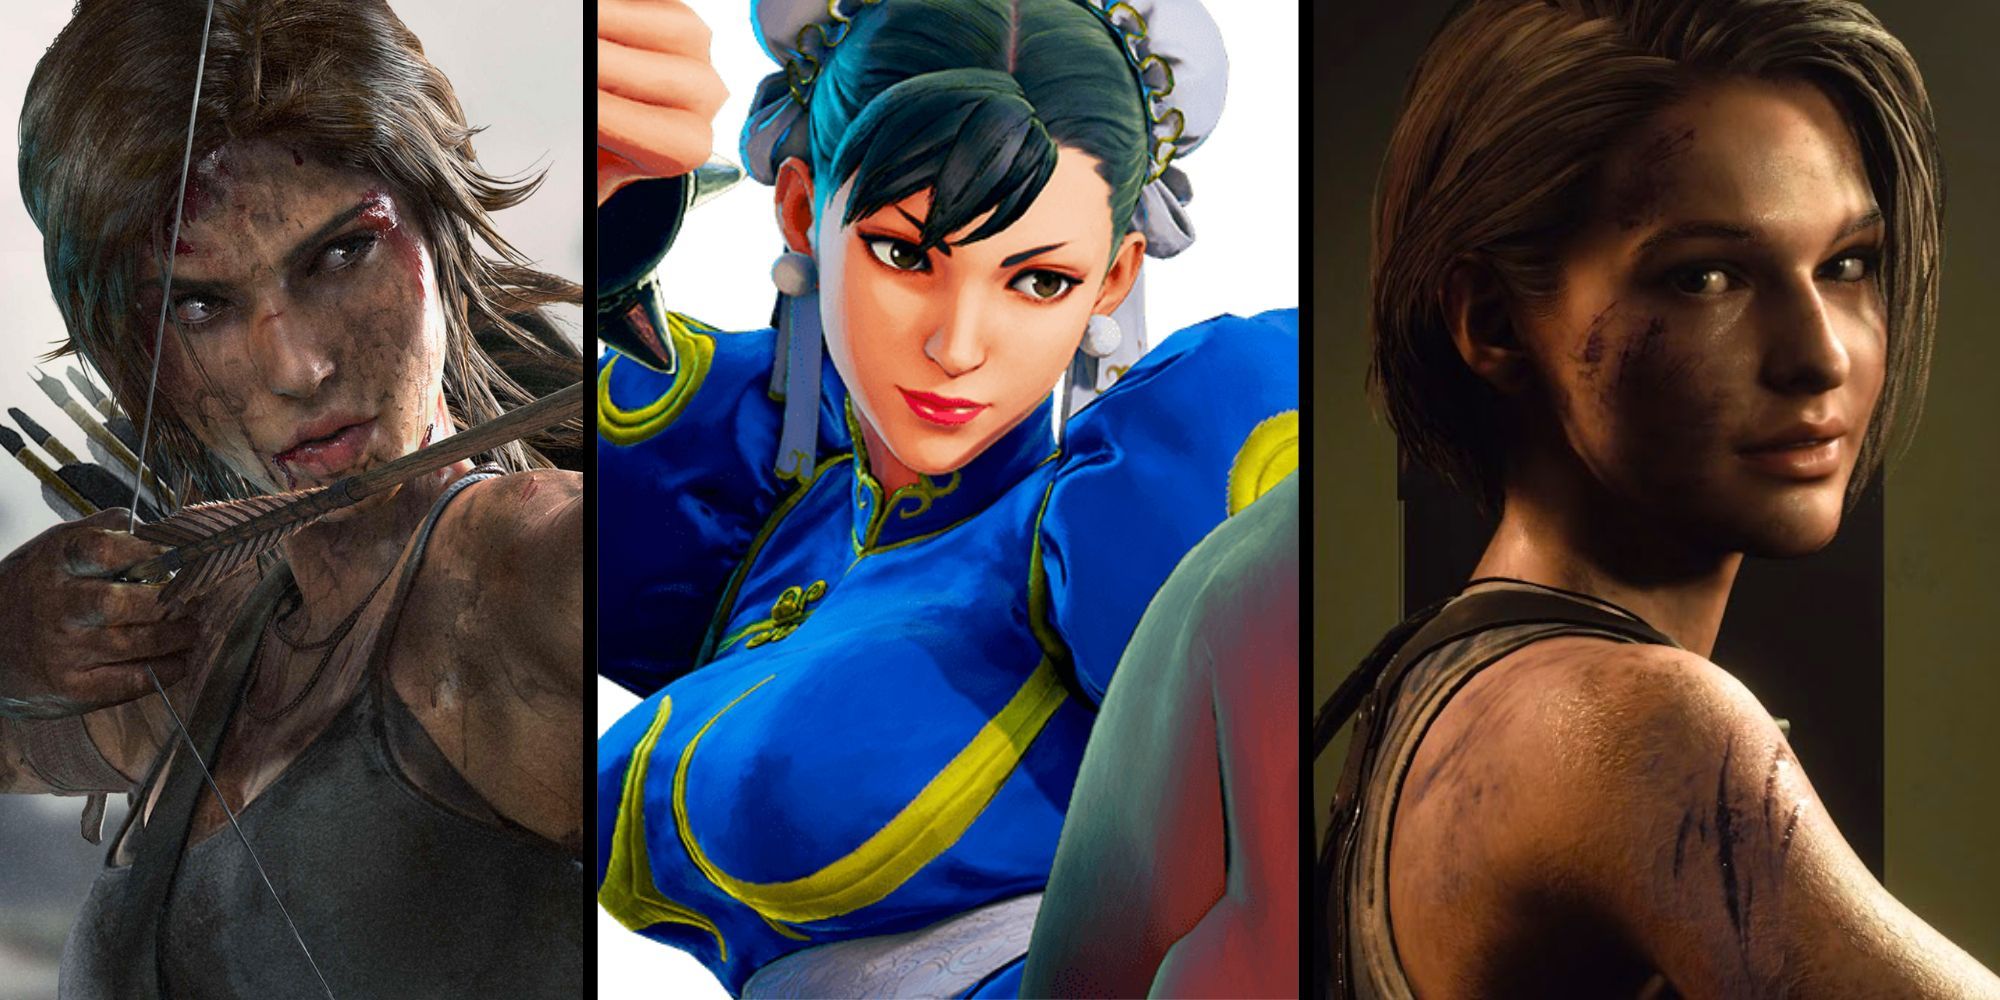 Lara Croft from Tomb Raider, Chun-Li from Street Fighter, and Jill Valentine from Resident Evil